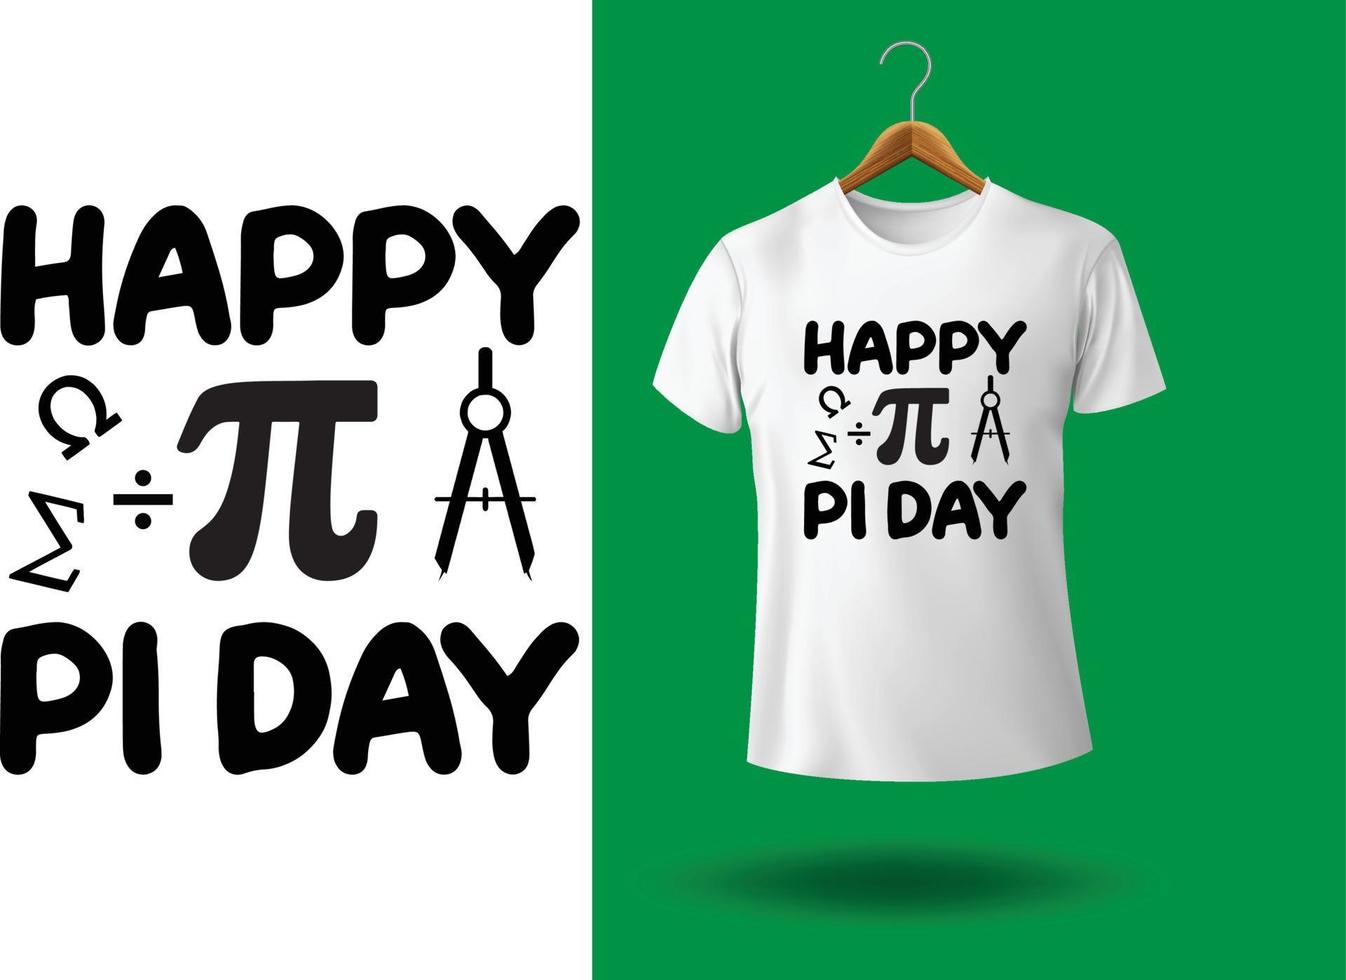 pi day t-shirt design vektor